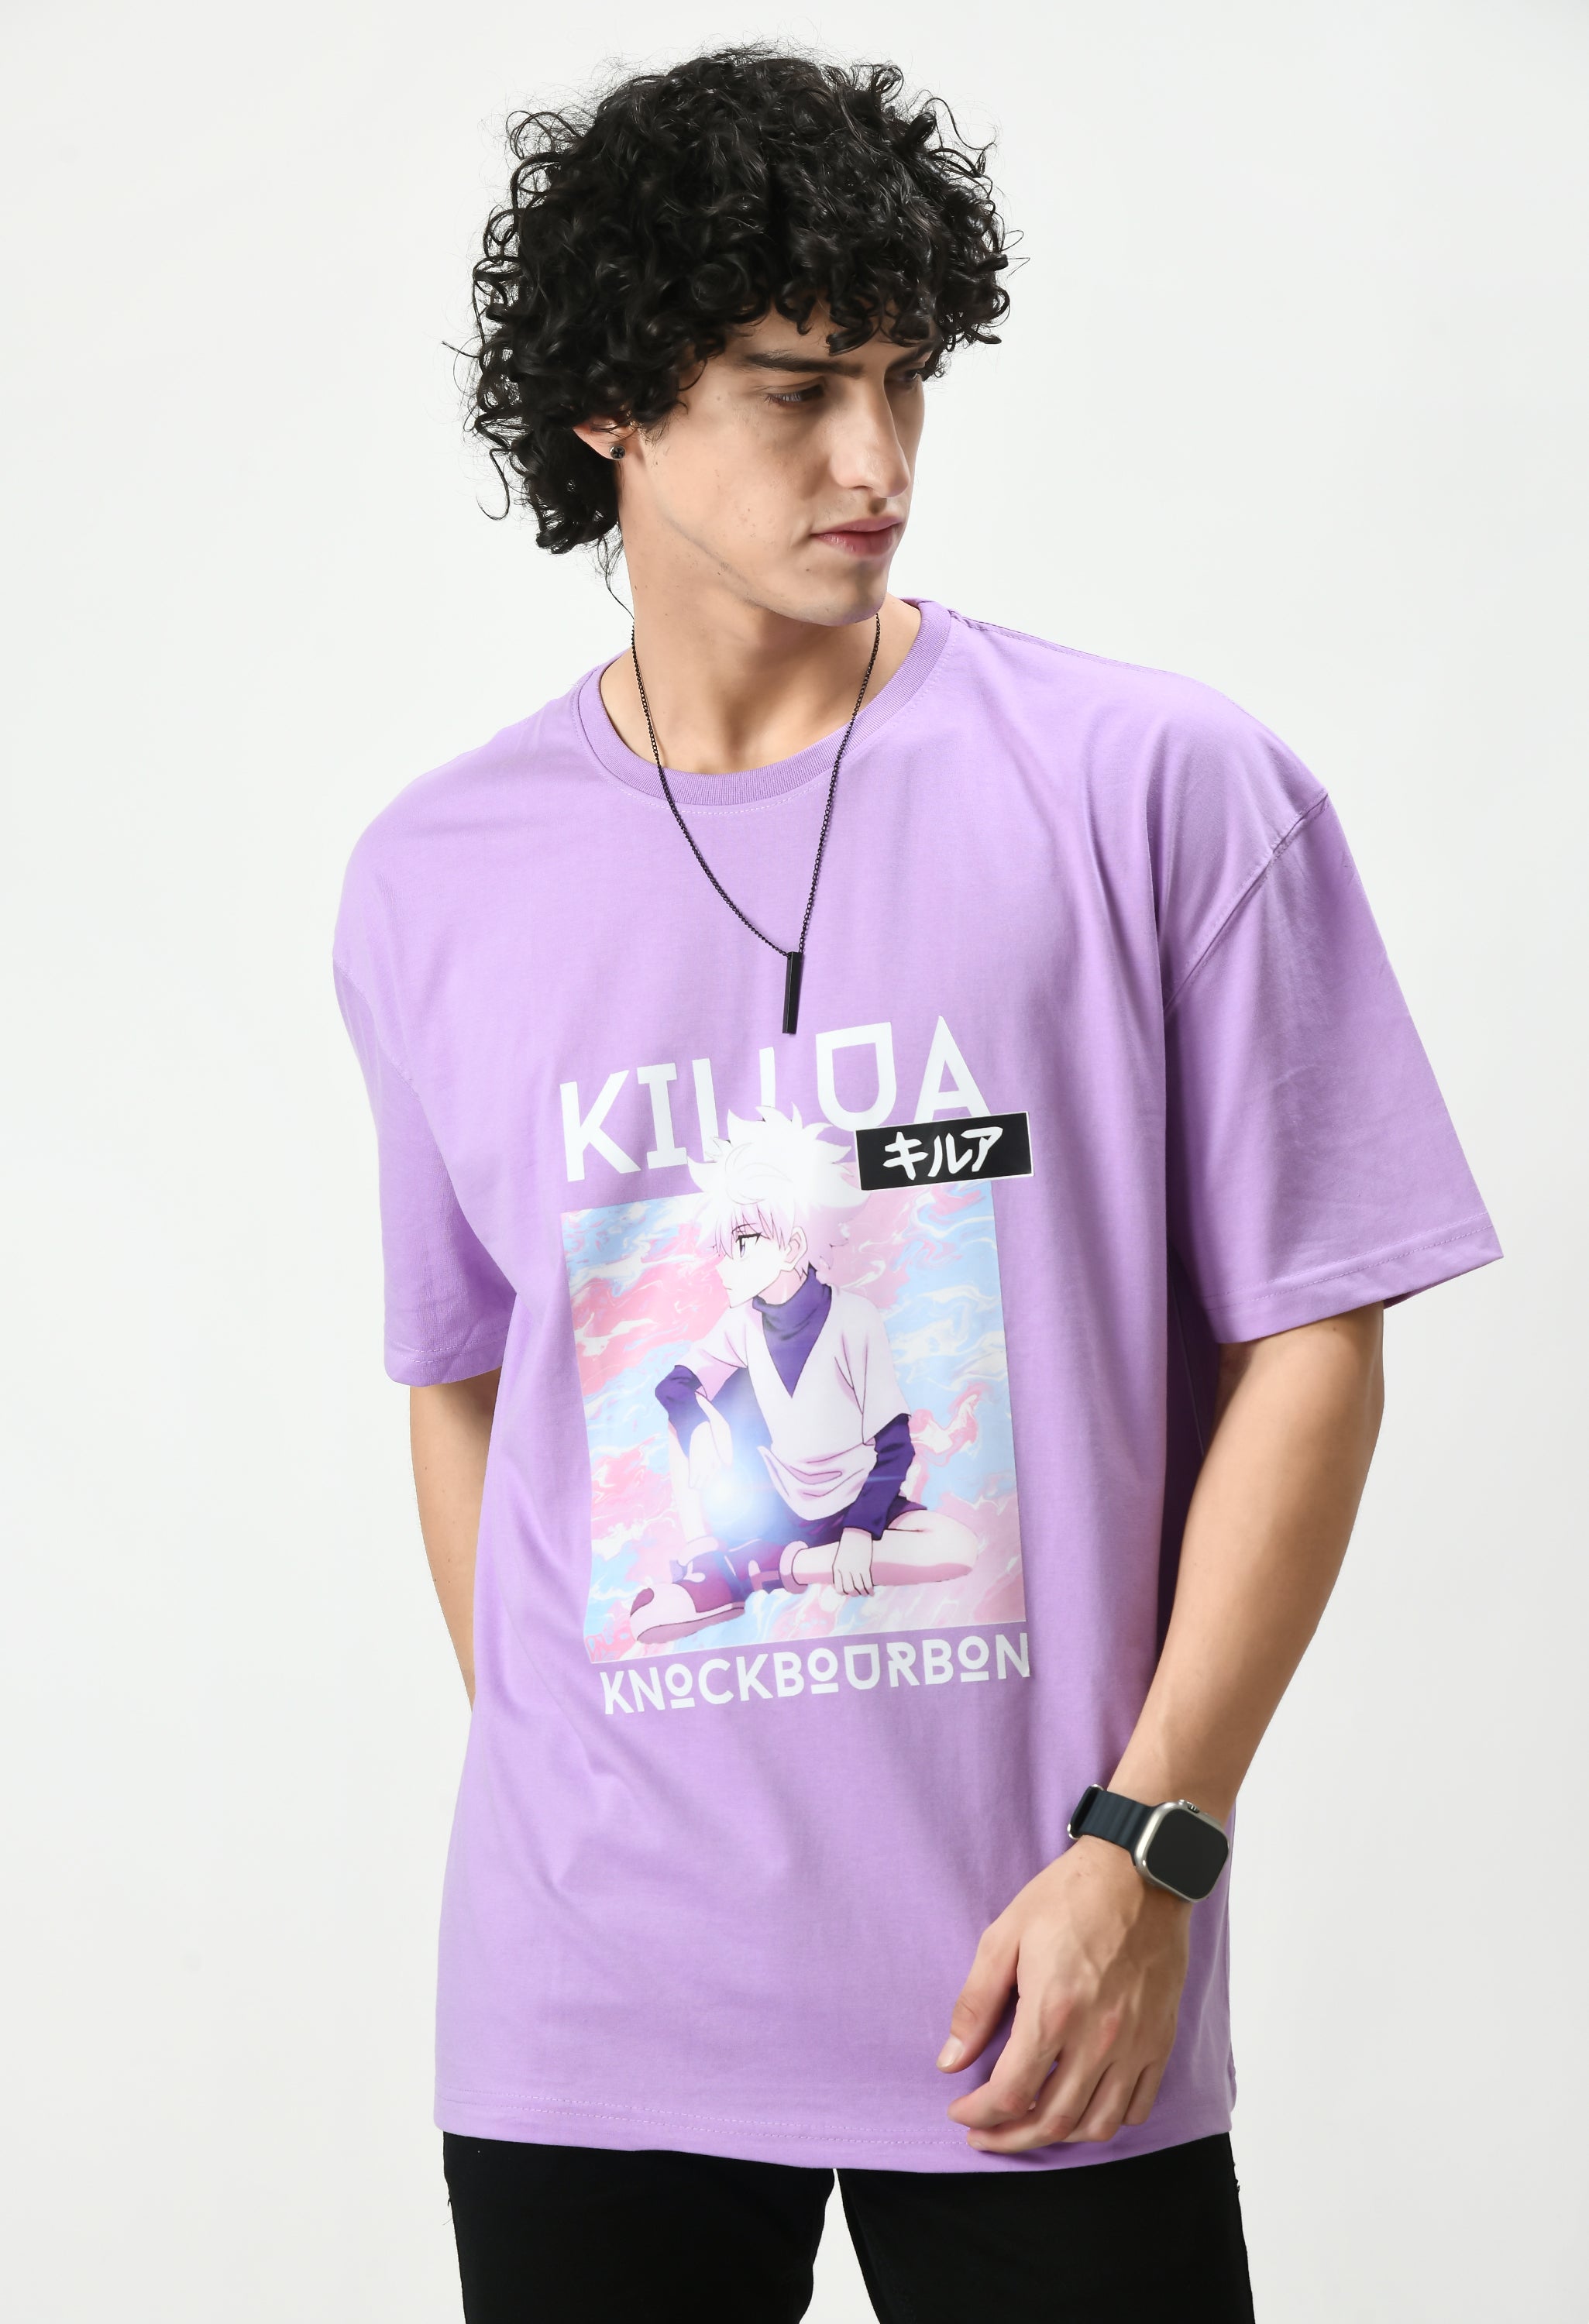 Killua Graphic Printed Oversized T-shirt By Knock Bourbon